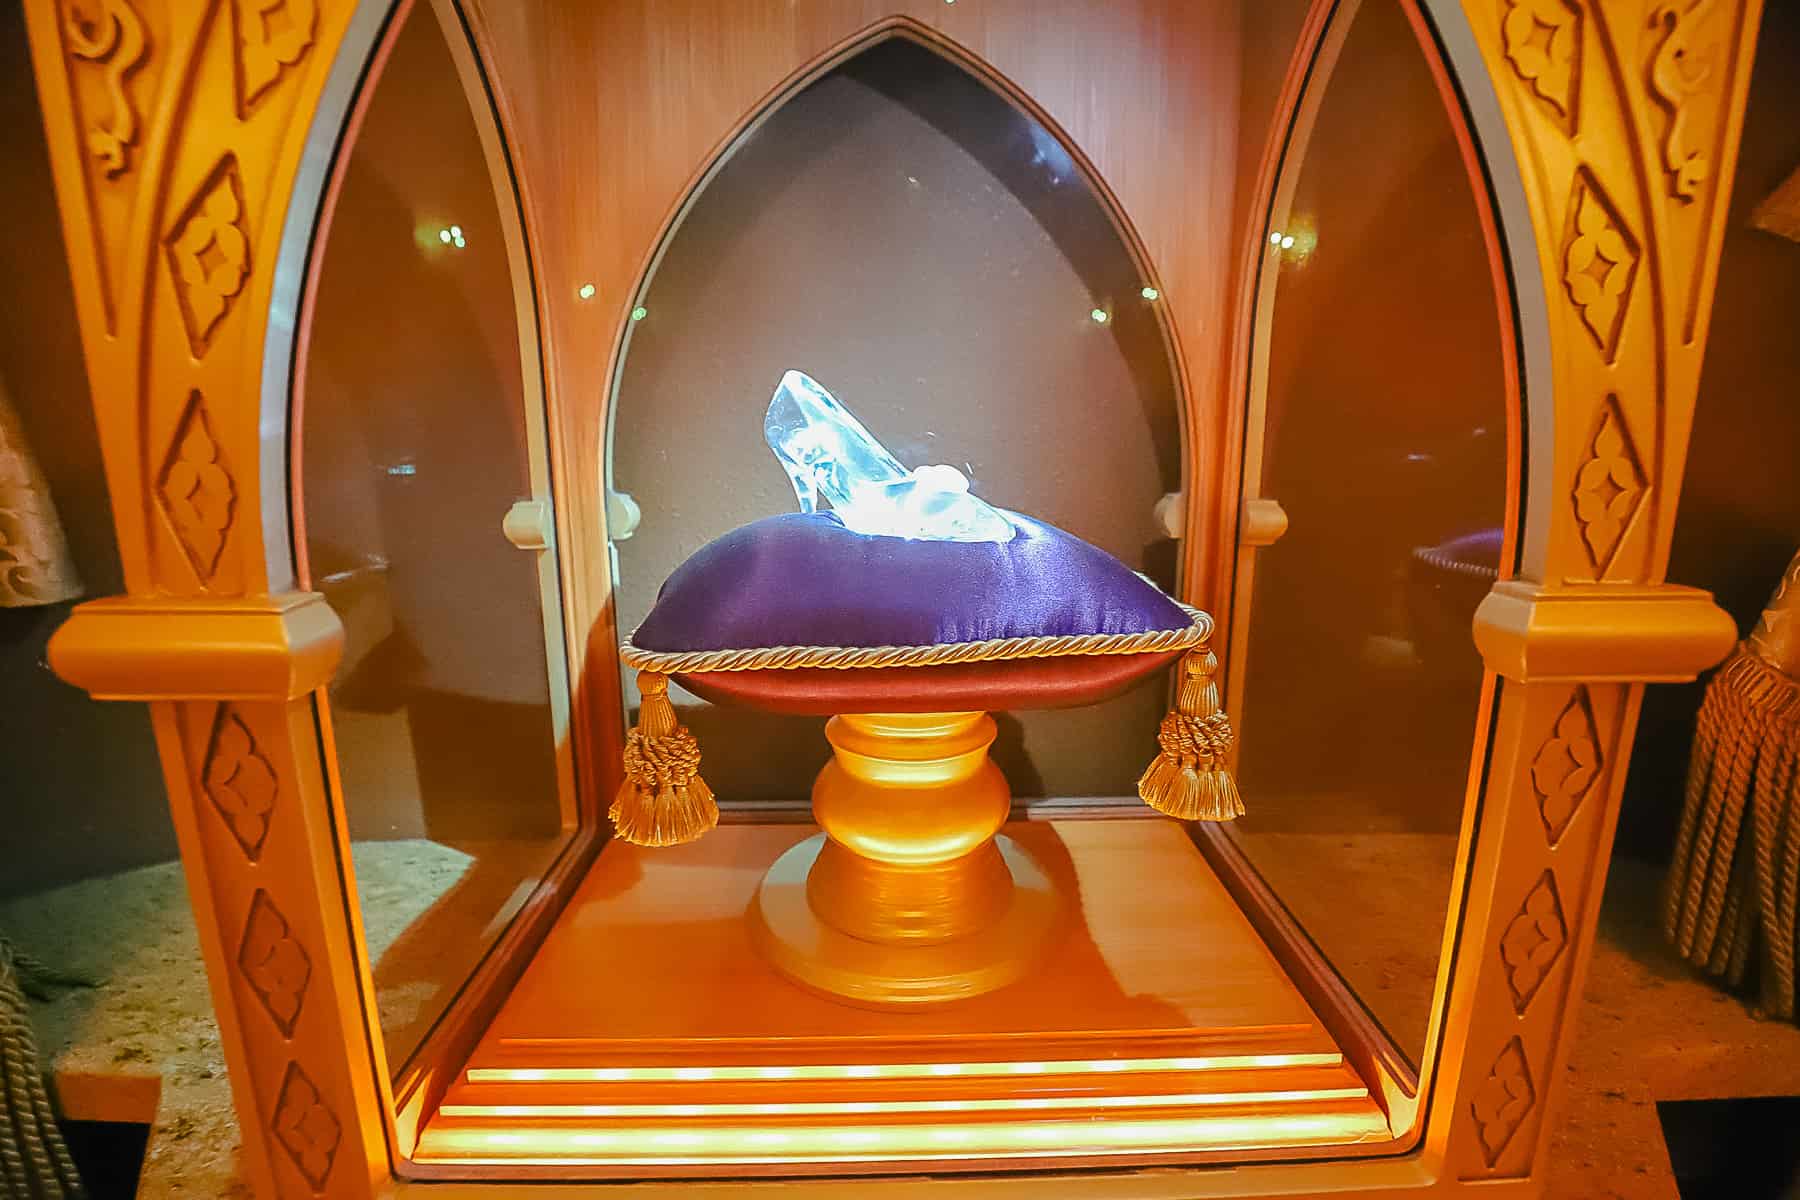 Cinderella Slipper on display at Princess Royal Fairytale Hall